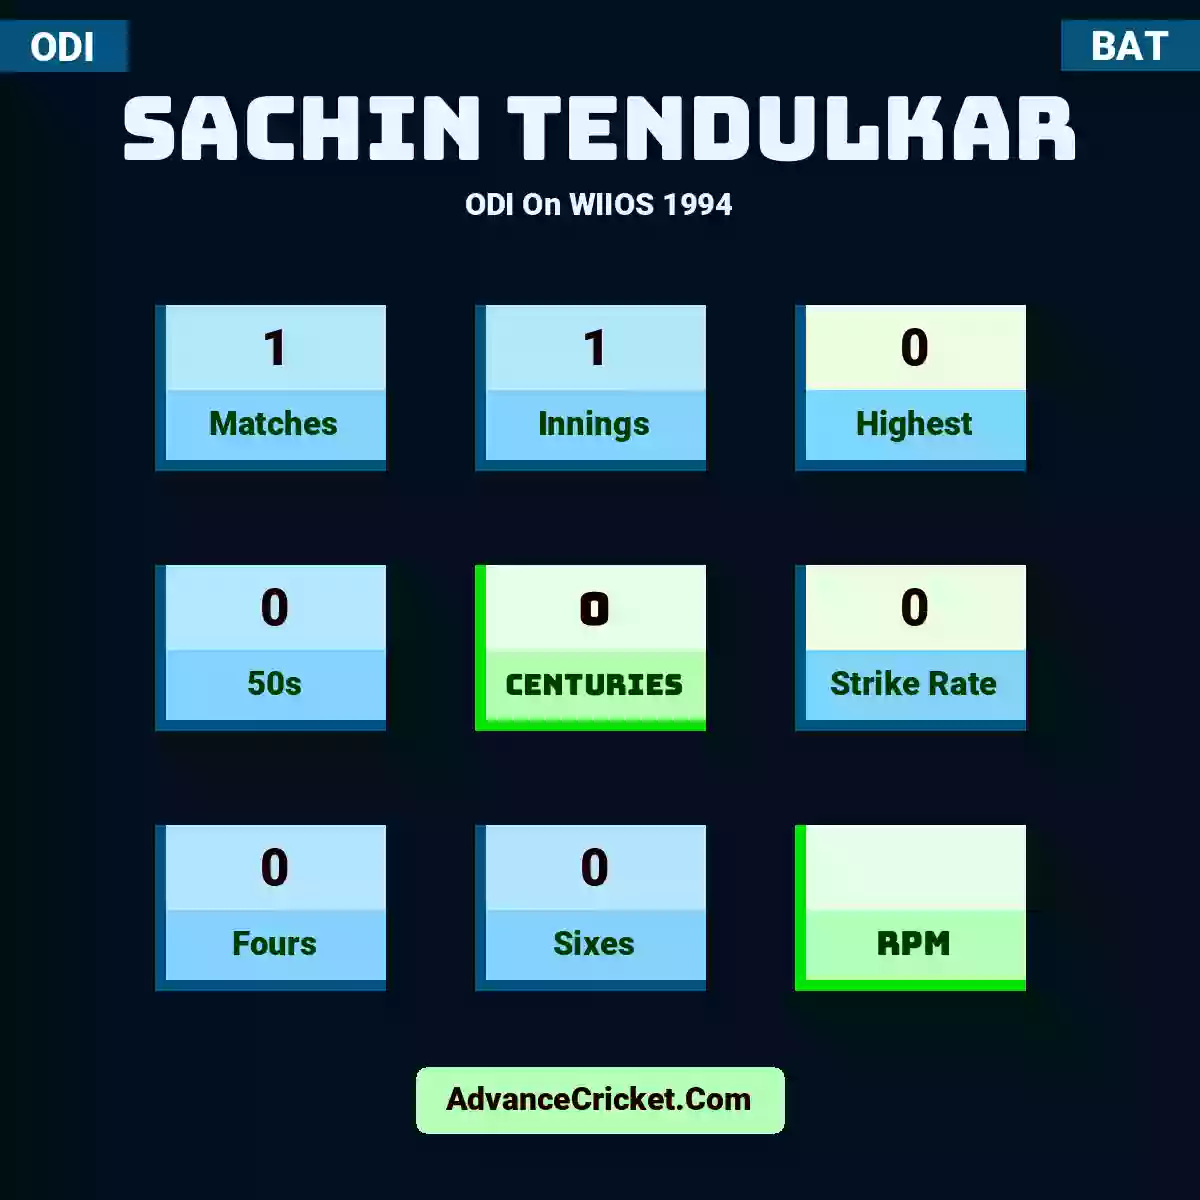 Sachin Tendulkar ODI  On WIIOS 1994, Sachin Tendulkar played 1 matches, scored 0 runs as highest, 0 half-centuries, and 0 centuries, with a strike rate of 0. S.Tendulkar hit 0 fours and 0 sixes.